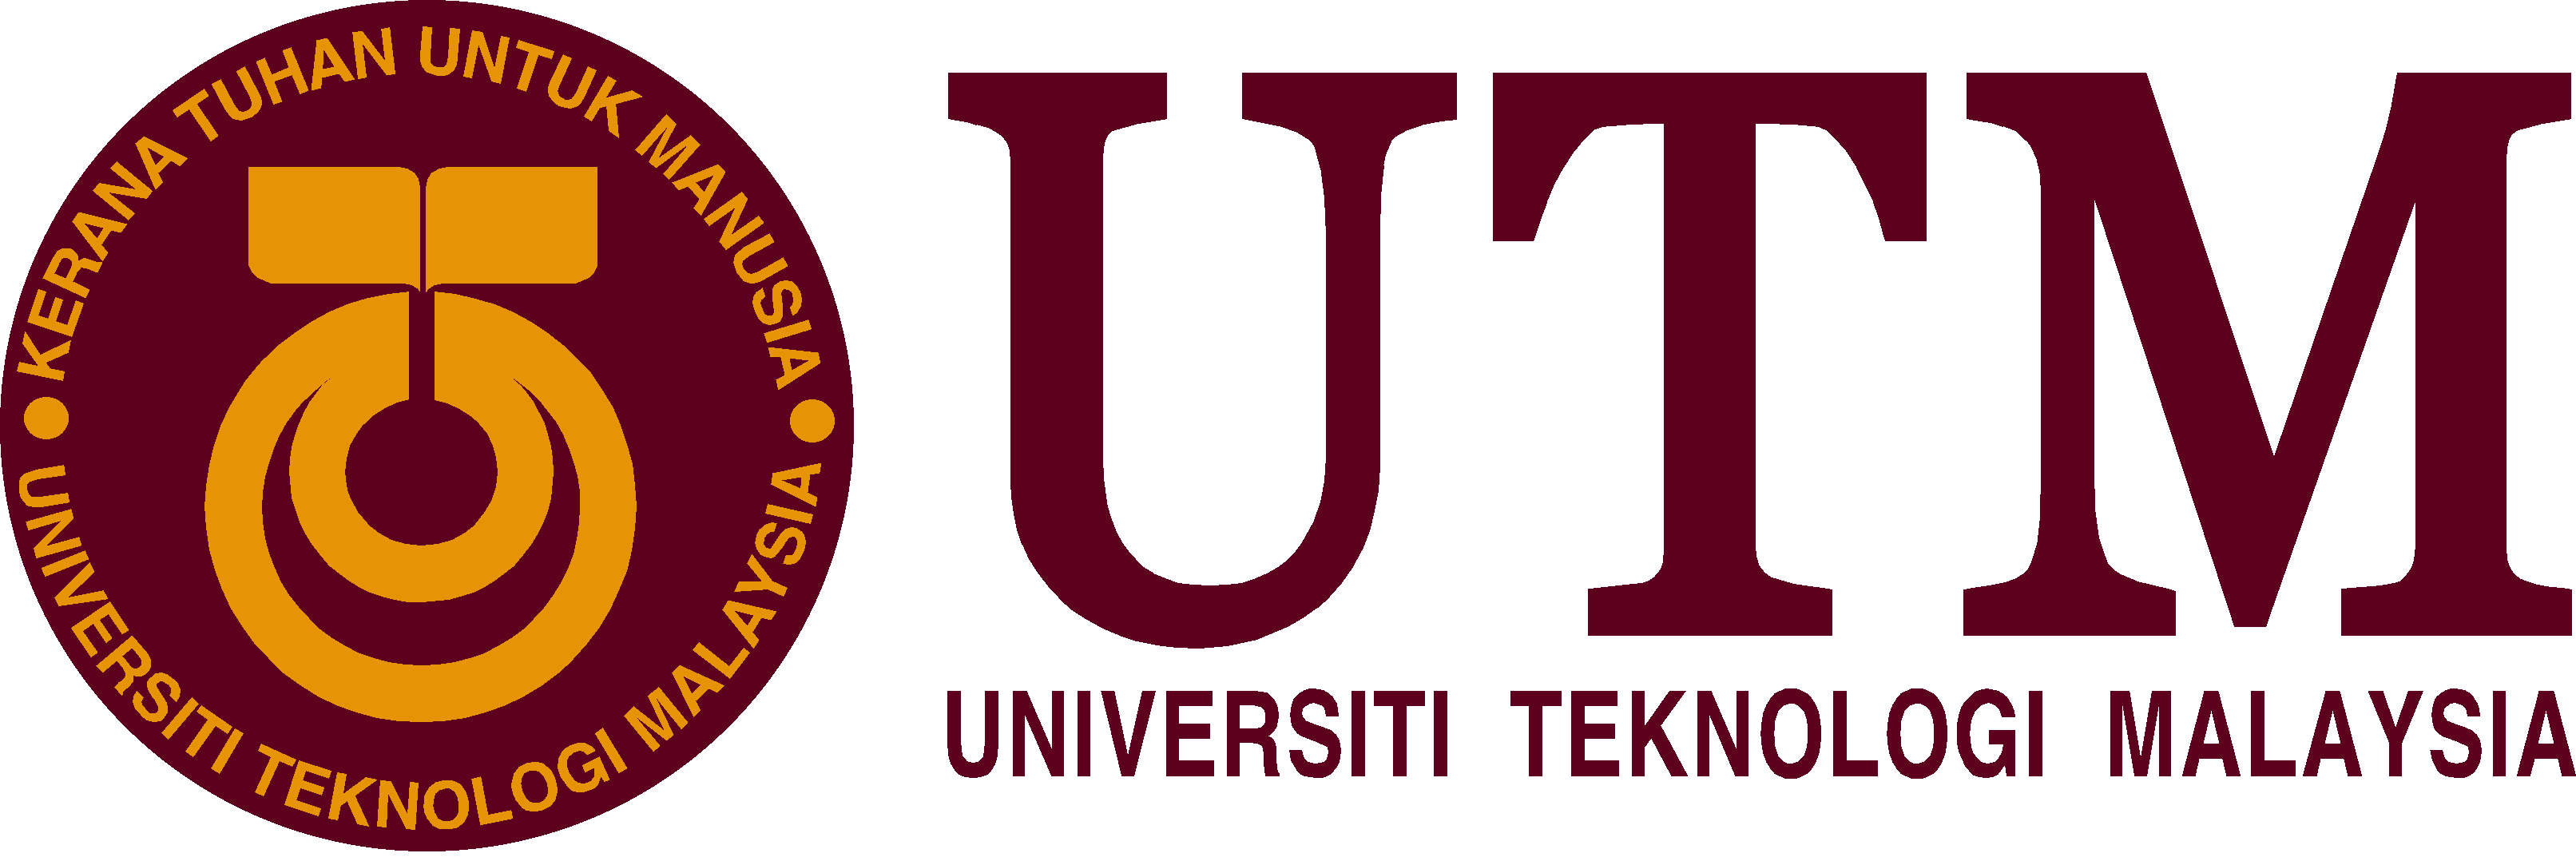 Utm university technology malaysia startup logo.